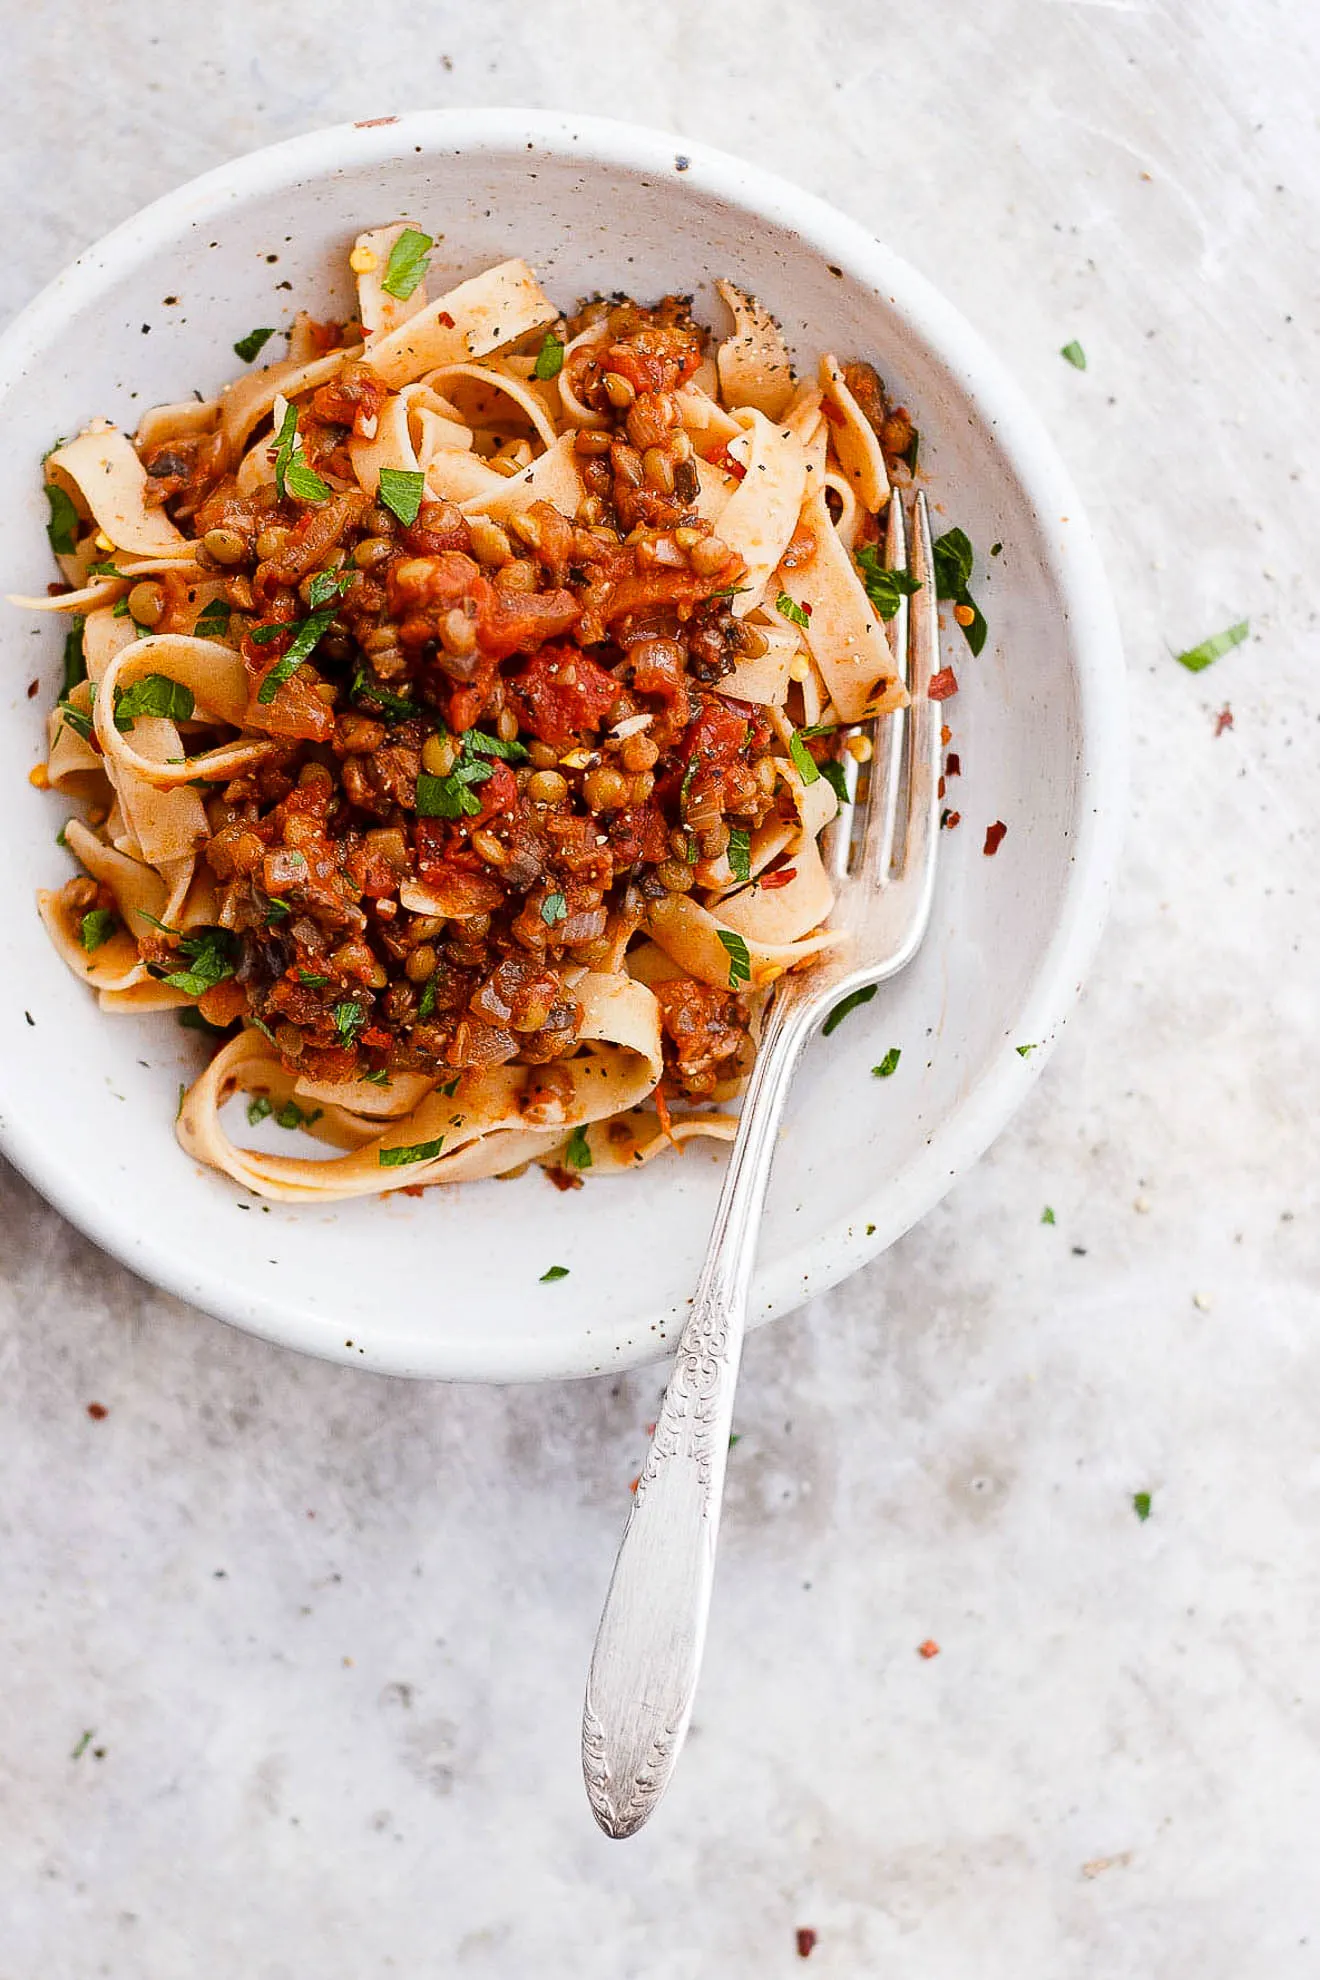  lentil bolognese sauce over pasta